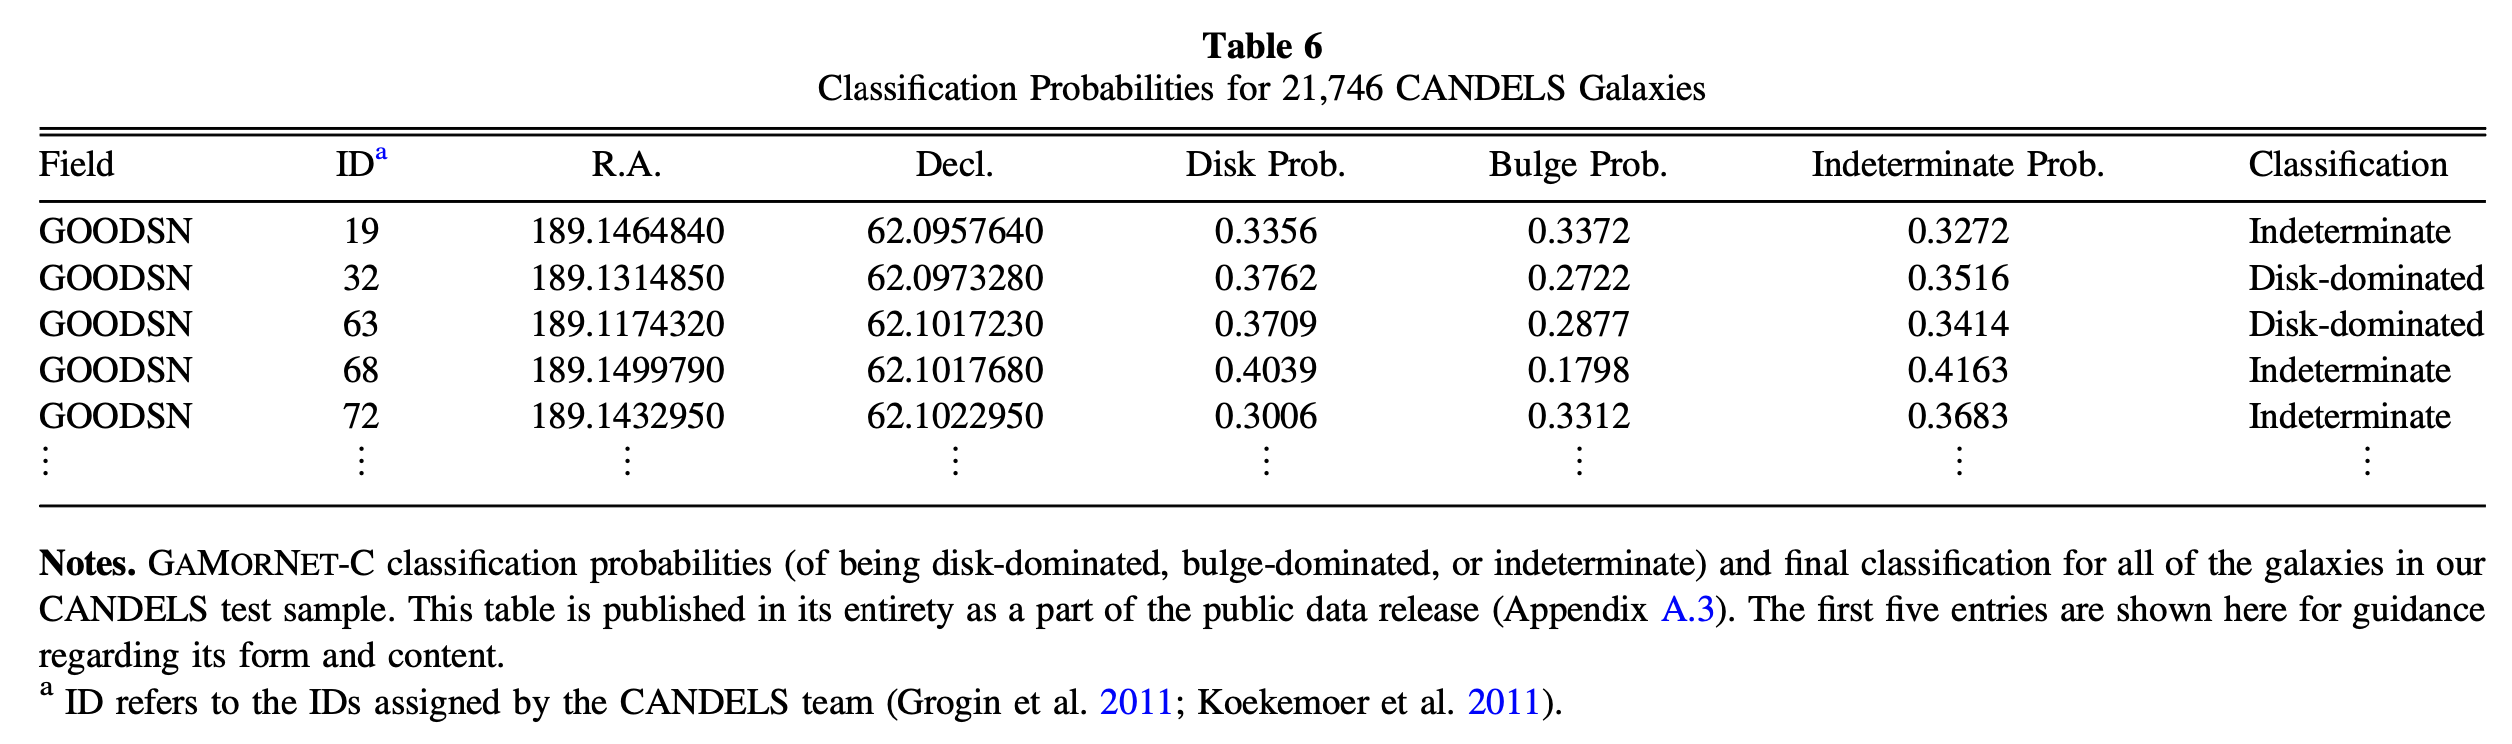 CANDELS Prediction
									Table